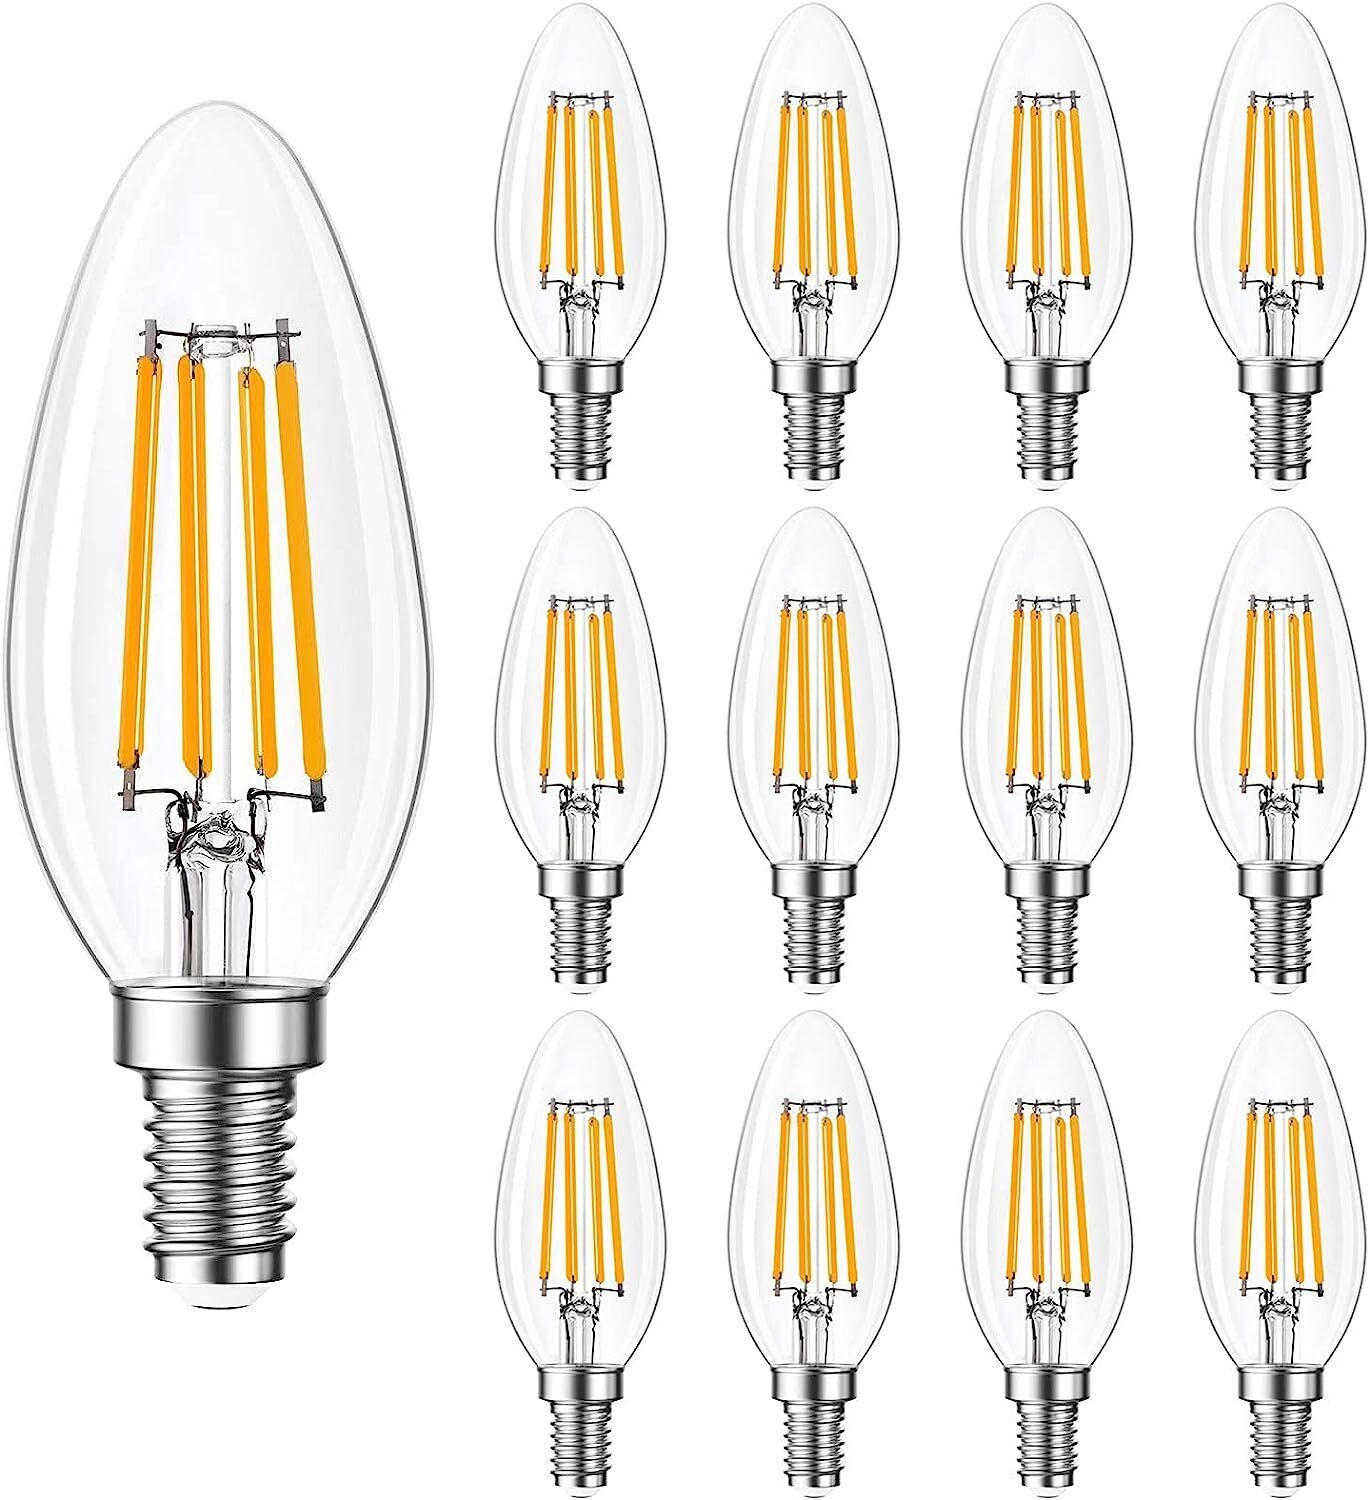 Qingmiao B11 E12 Dimmable LED Candelabra Bulbs 4W, 3000K Soft White, 12 Pack